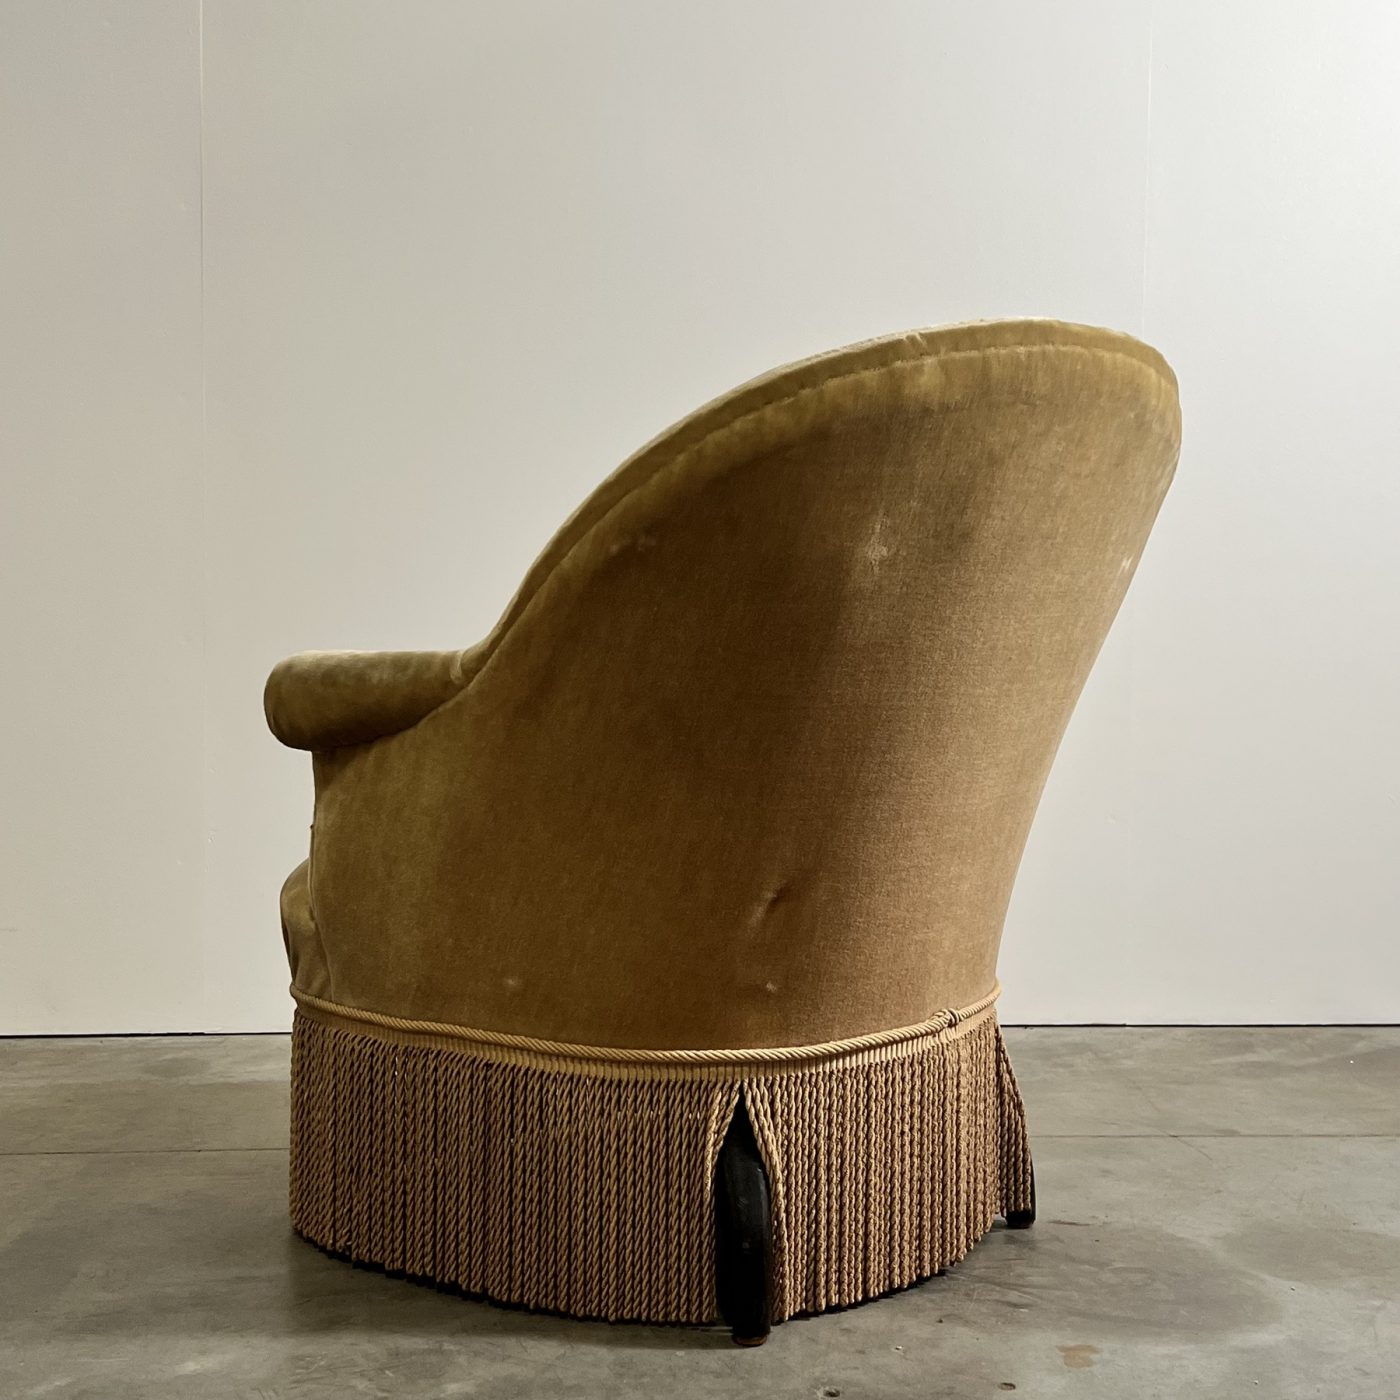 objet-vagabond-napoleon3-chairs0000